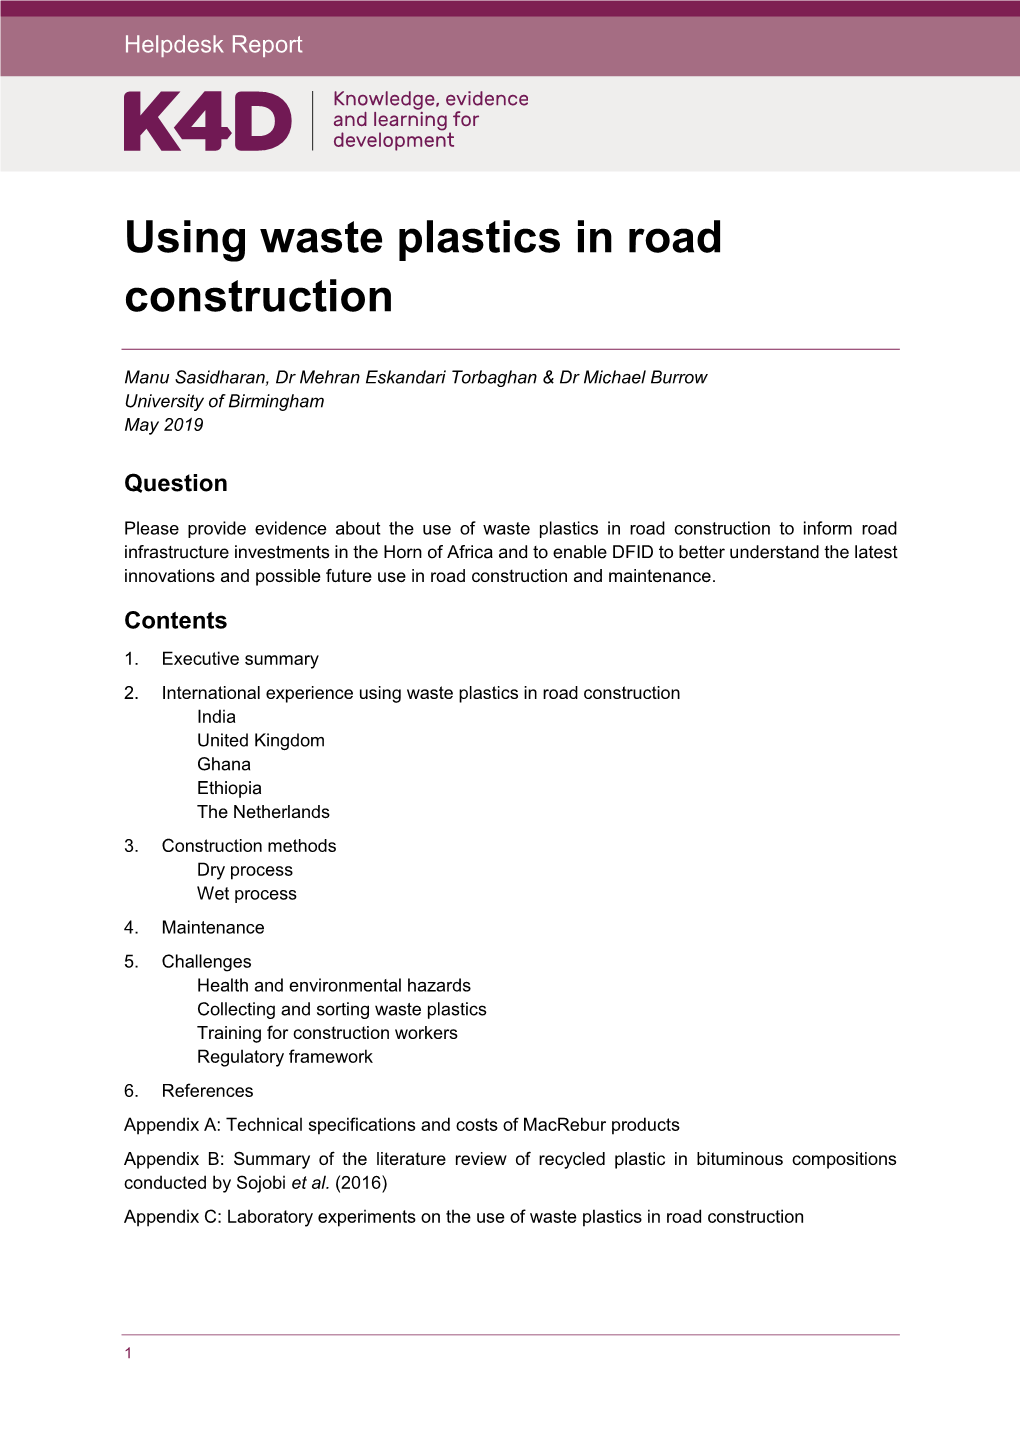 Using Waste Plastics in Road Construction